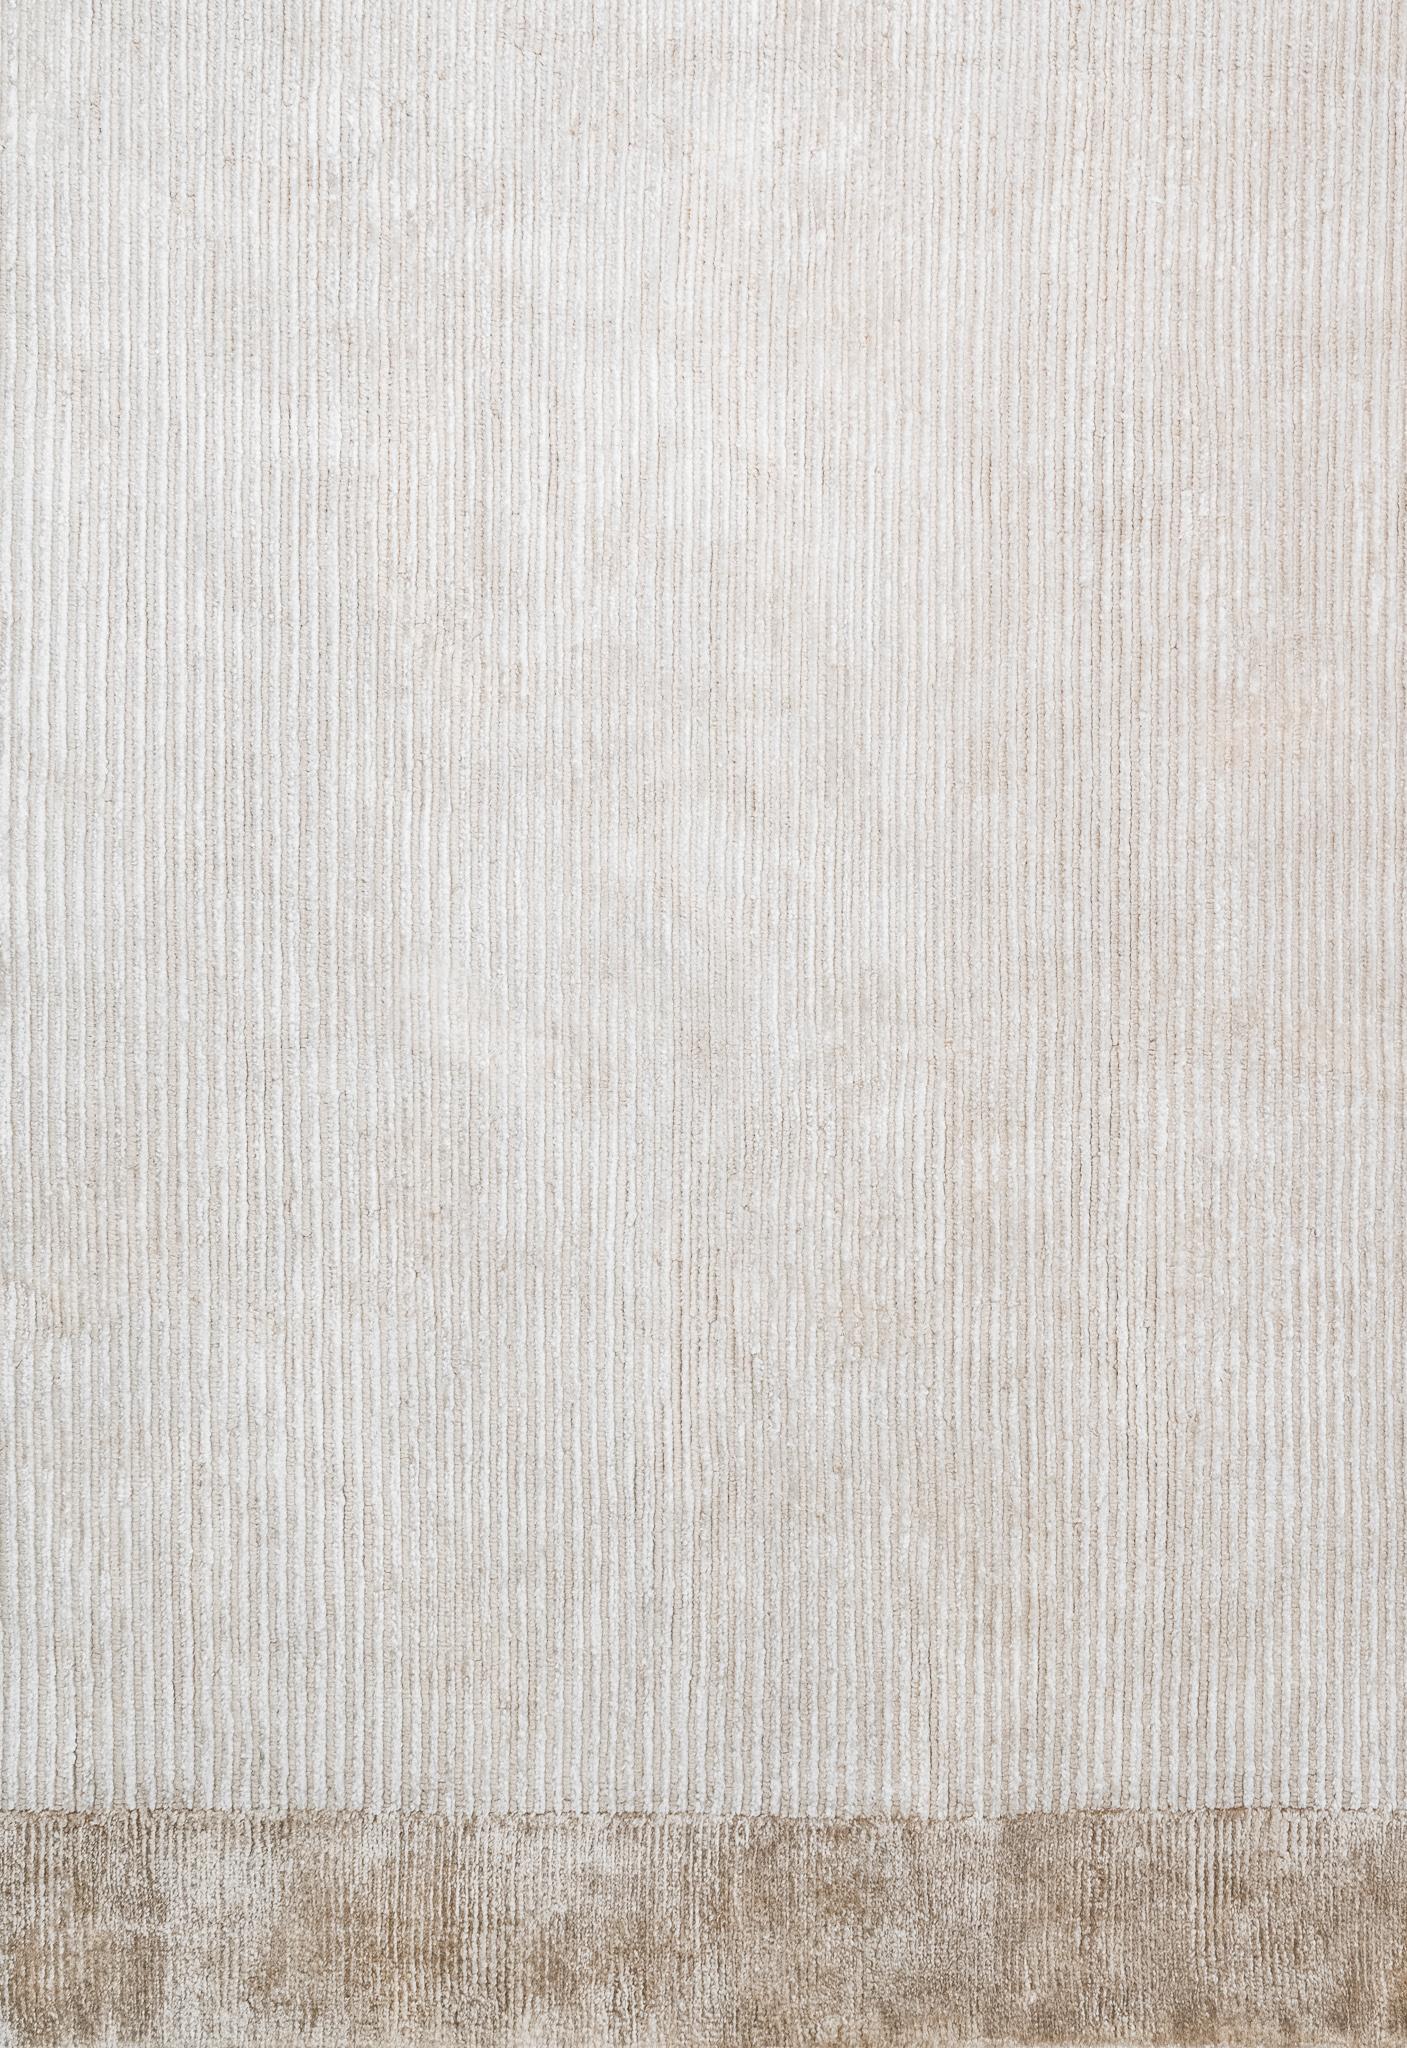 Nepalese Plain White beige Contemporary rug Scandinavian Modern - Breton Beige For Sale